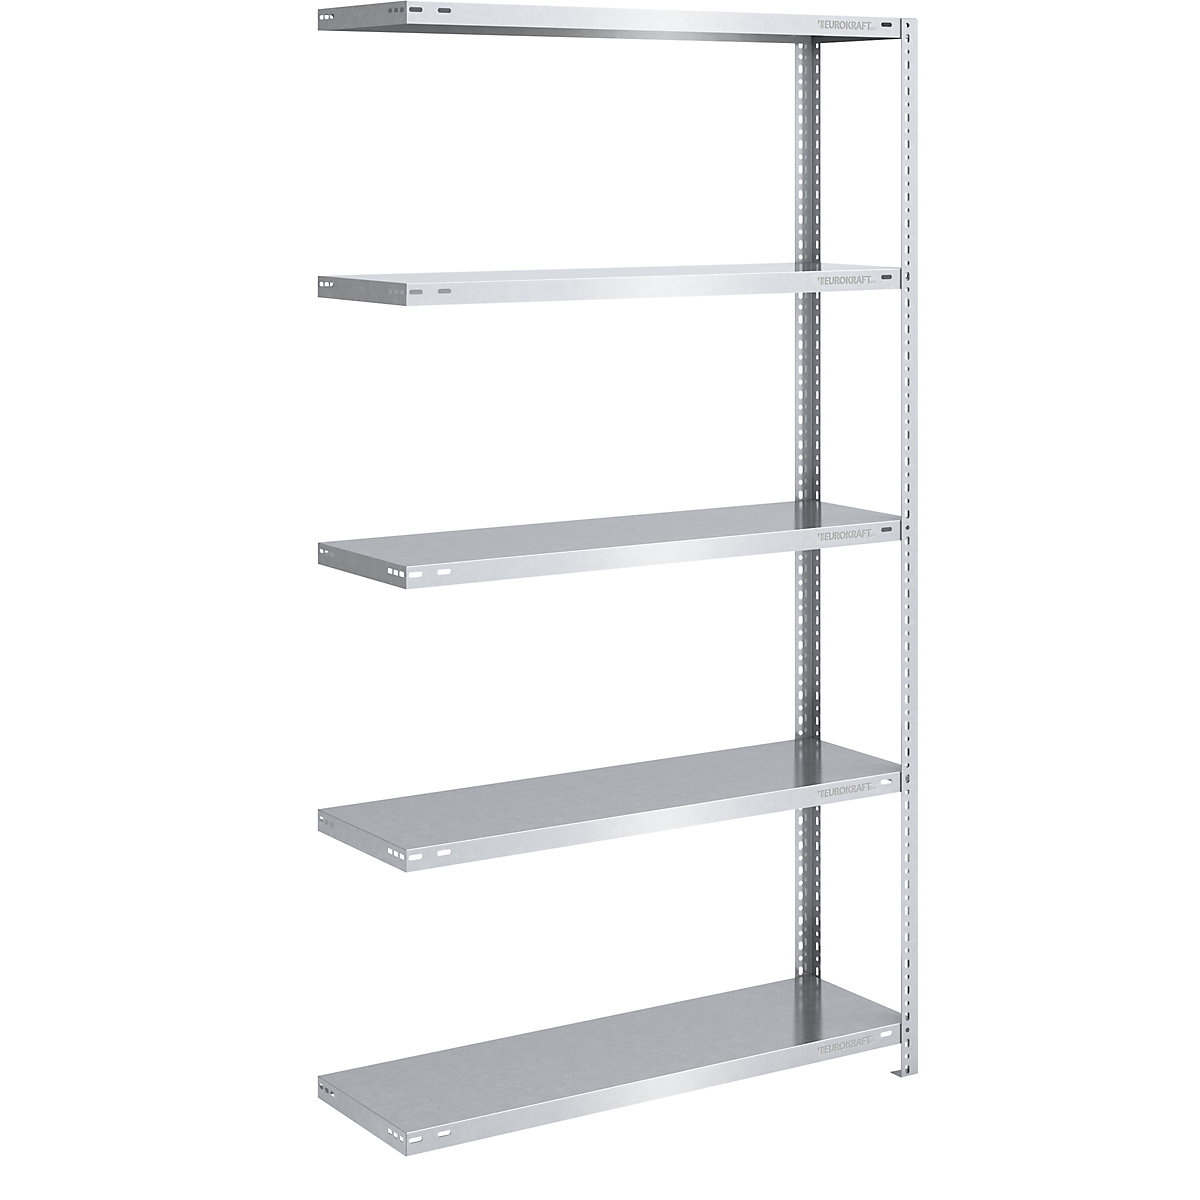 Bolt-together storage shelving, zinc plated, medium duty – eurokraft pro, shelf unit height 2000 mm, shelf width 1000 mm, depth 400 mm, extension shelf unit-3